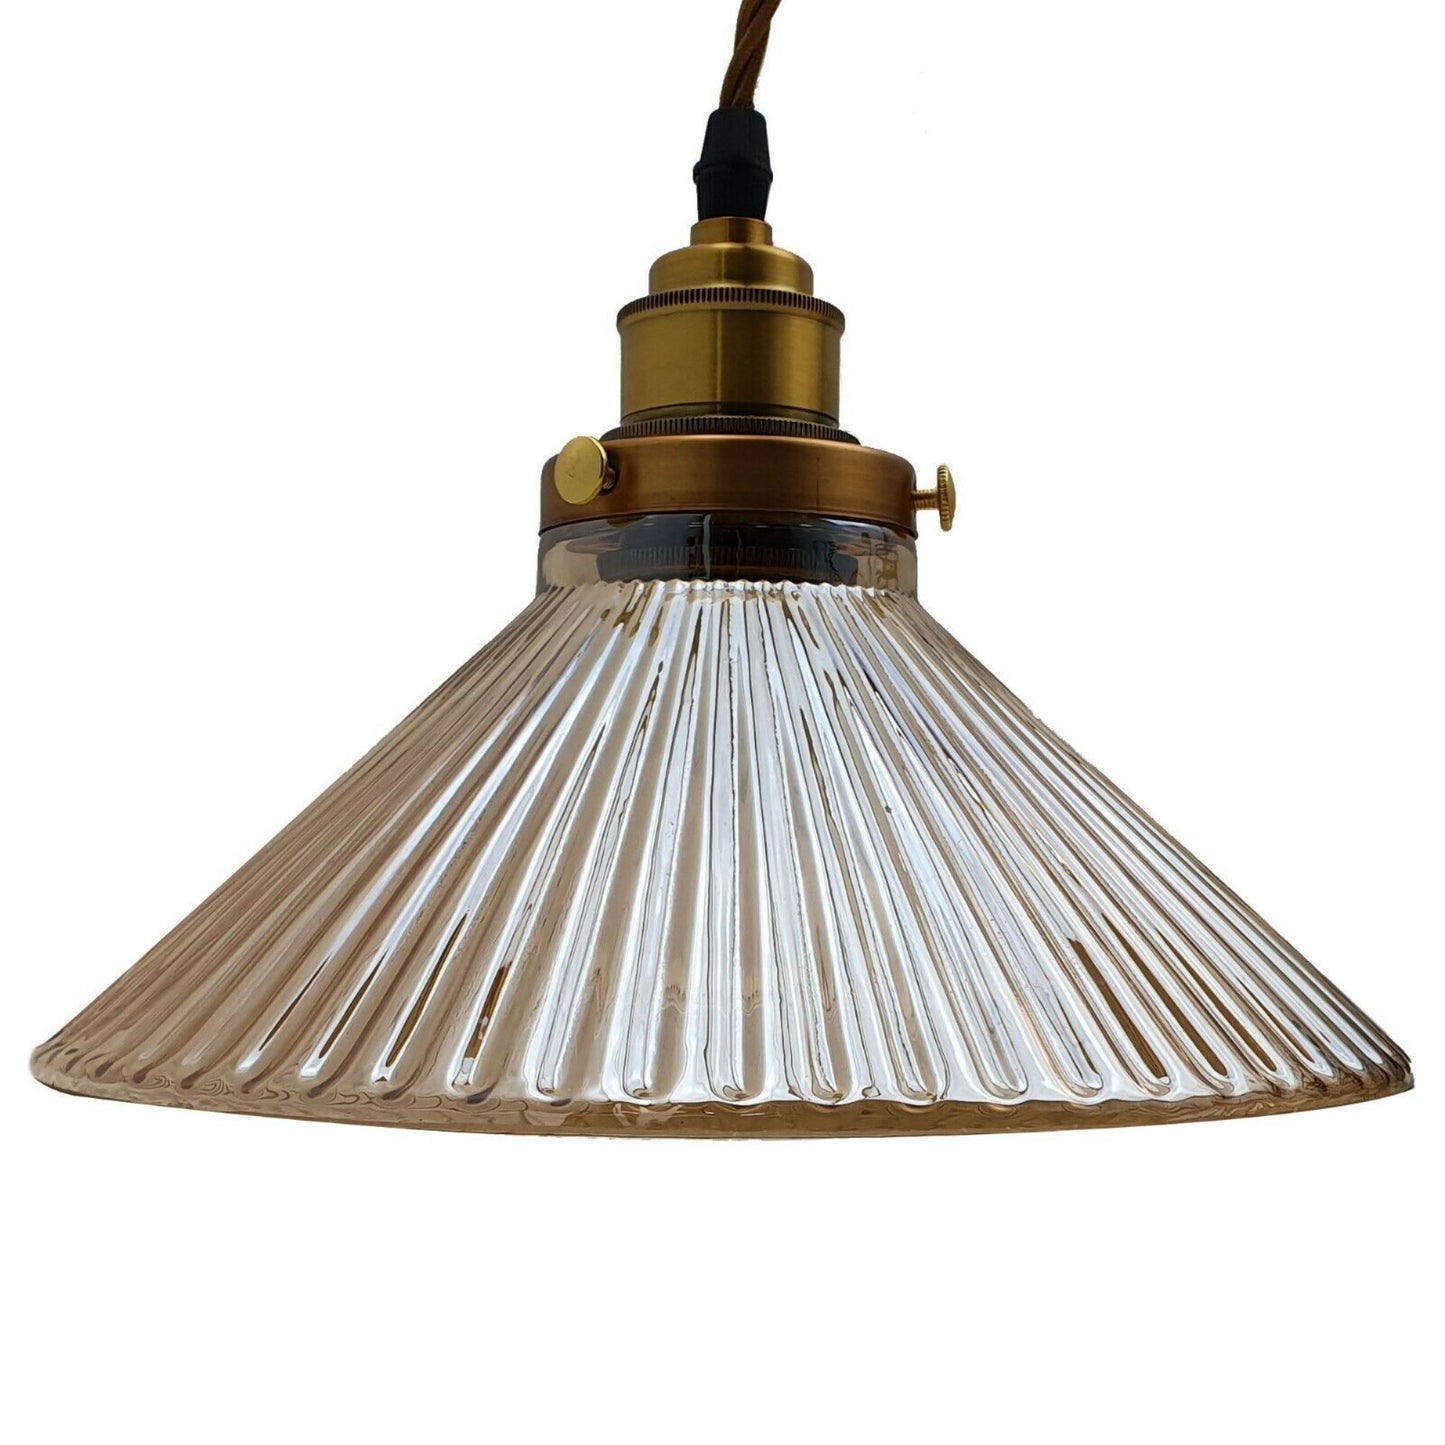 Style Glass Shade Lamp Ceiling Retro Pendant Lighting - Vintagelite